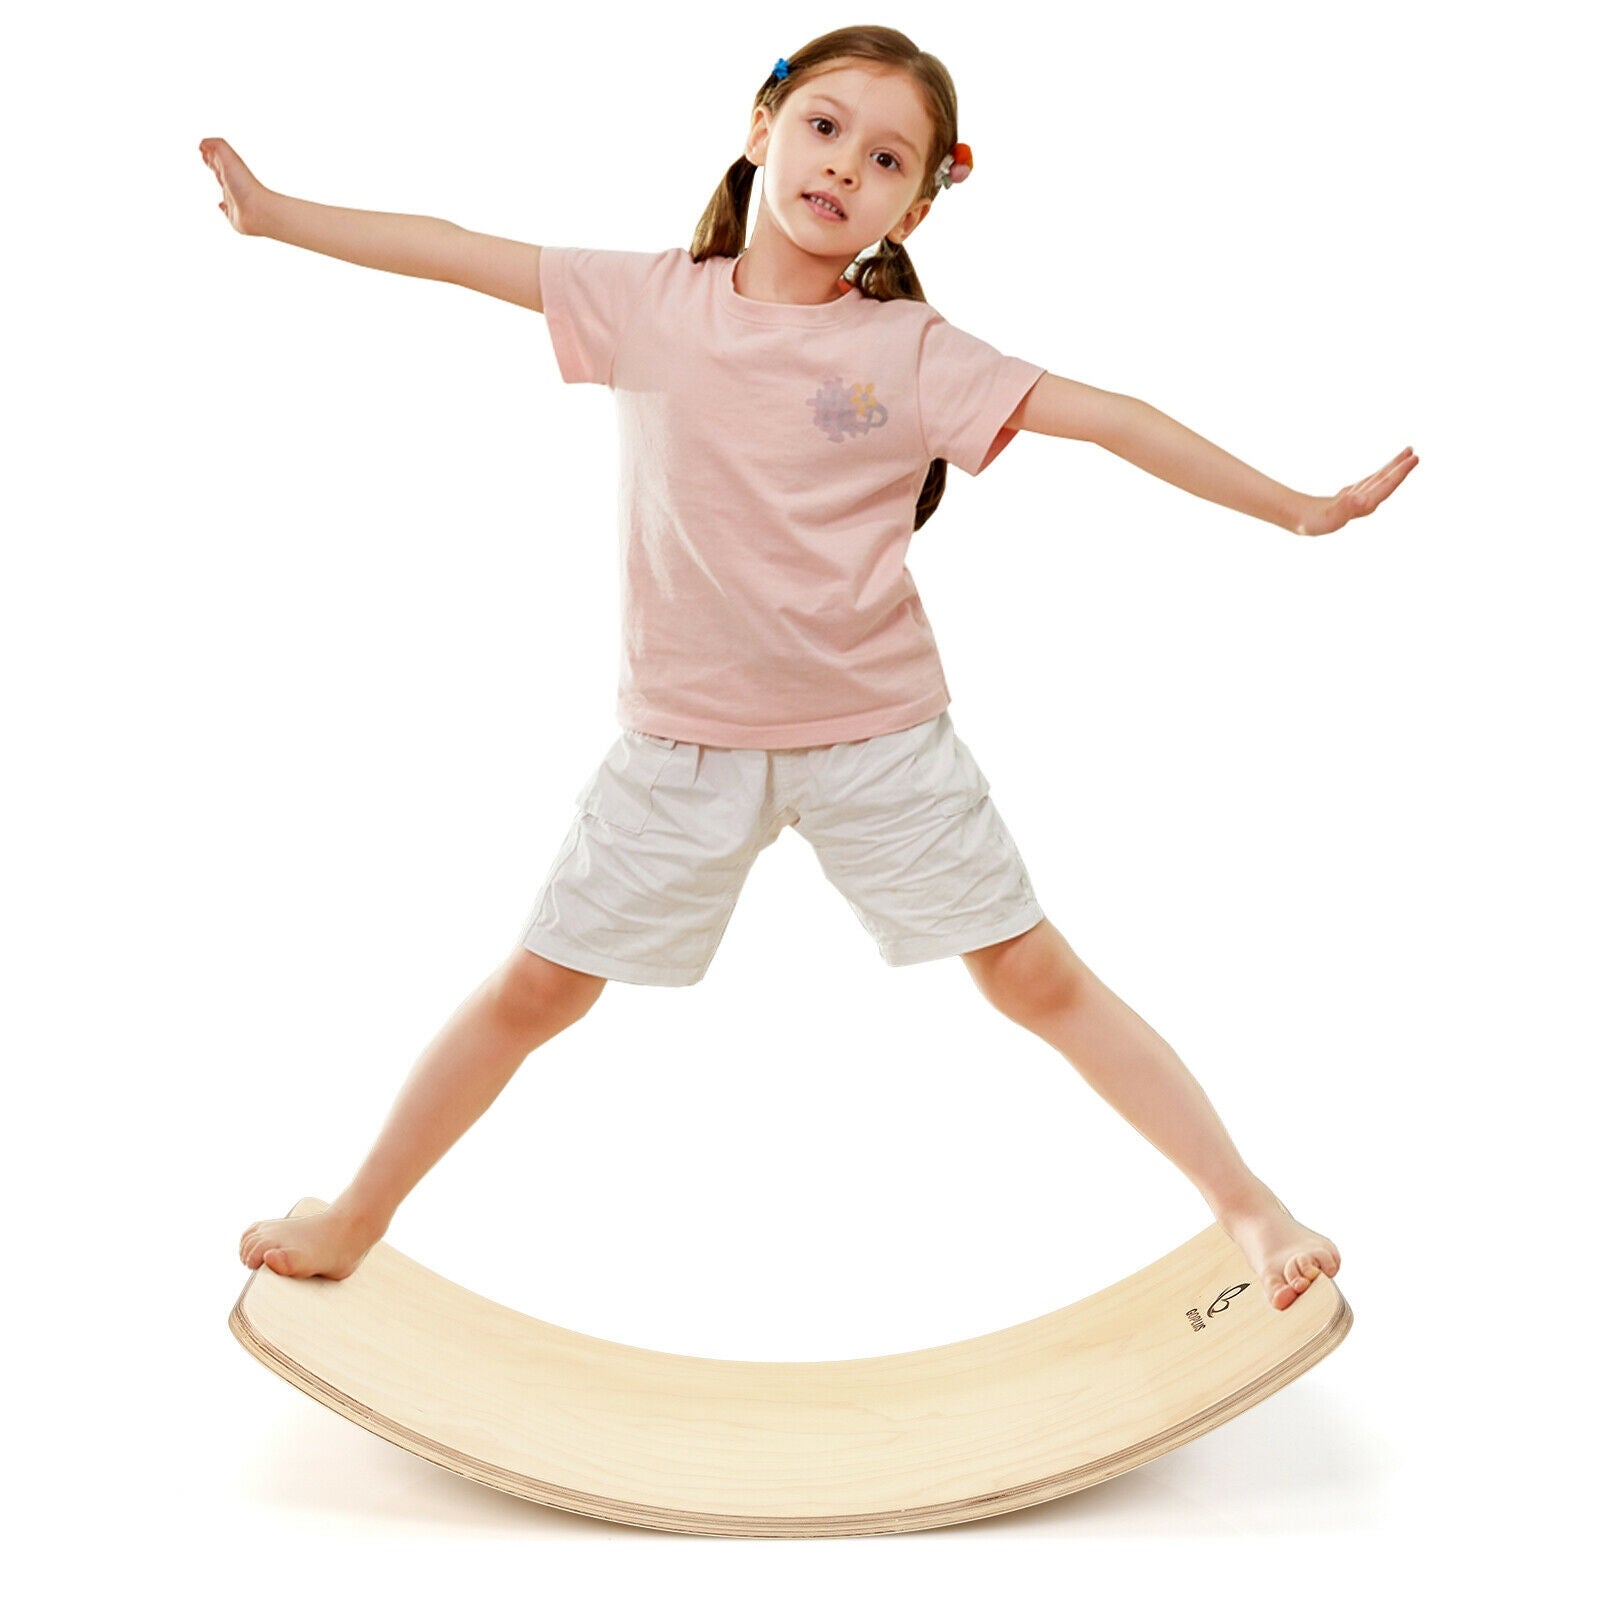 35 Inch Wooden Wobble Balance Board Kids Rocker Yoga Curvy Board Toy with Felt Layer at Gallery Canada